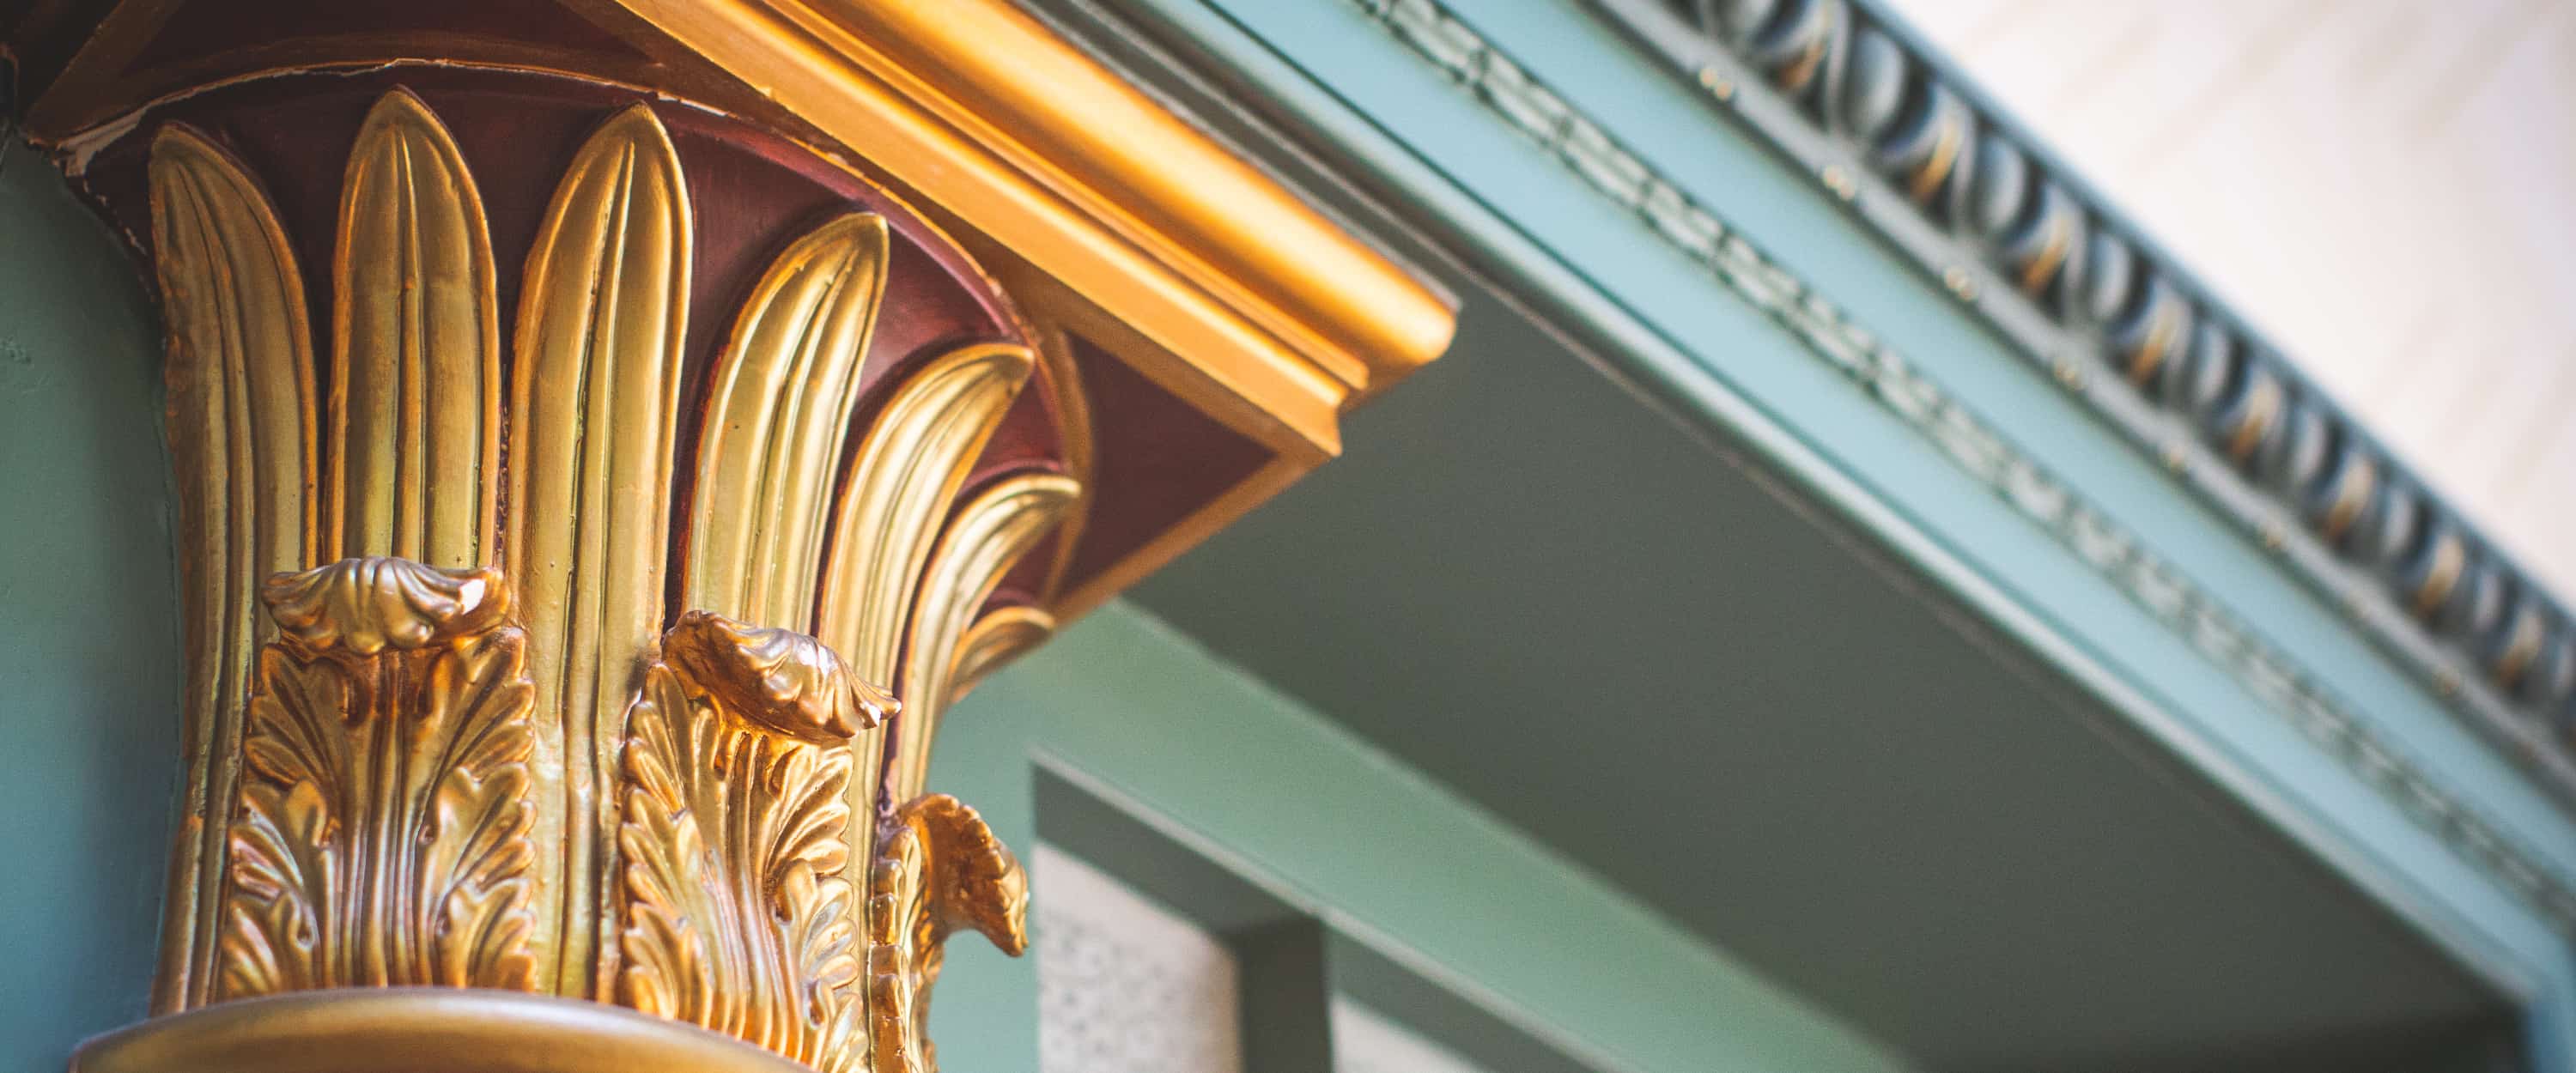 Ornate golden column capital against a soft-focus architectural background.